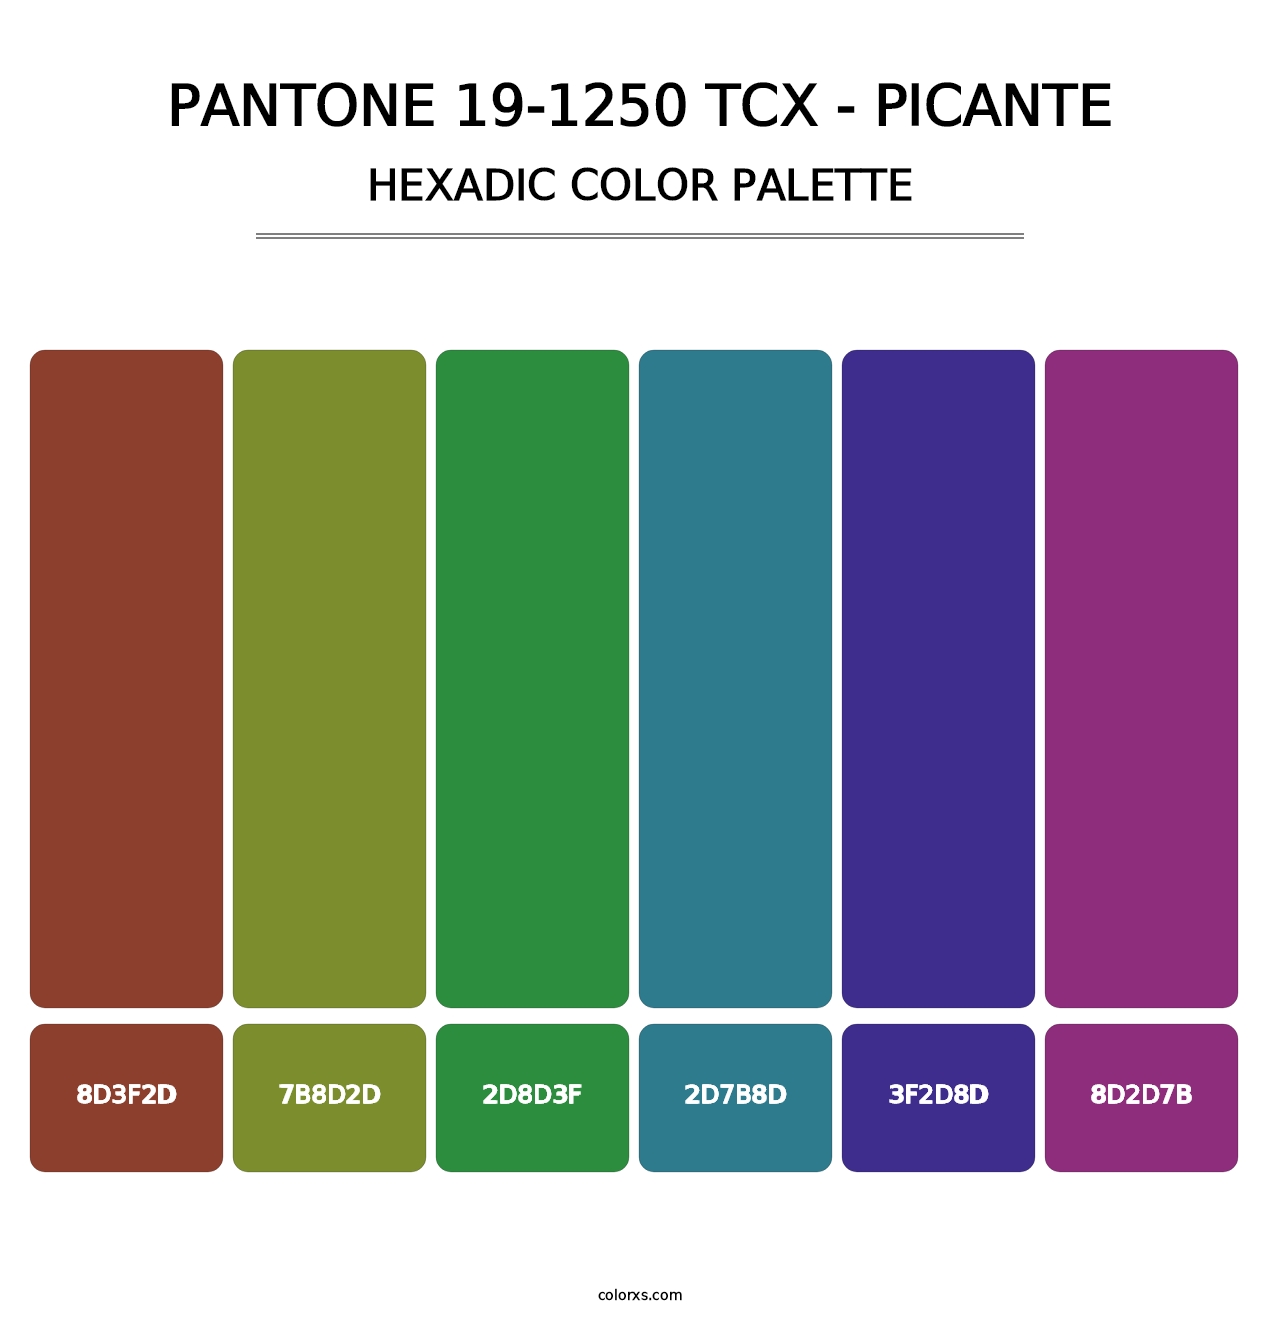 PANTONE 19-1250 TCX - Picante - Hexadic Color Palette